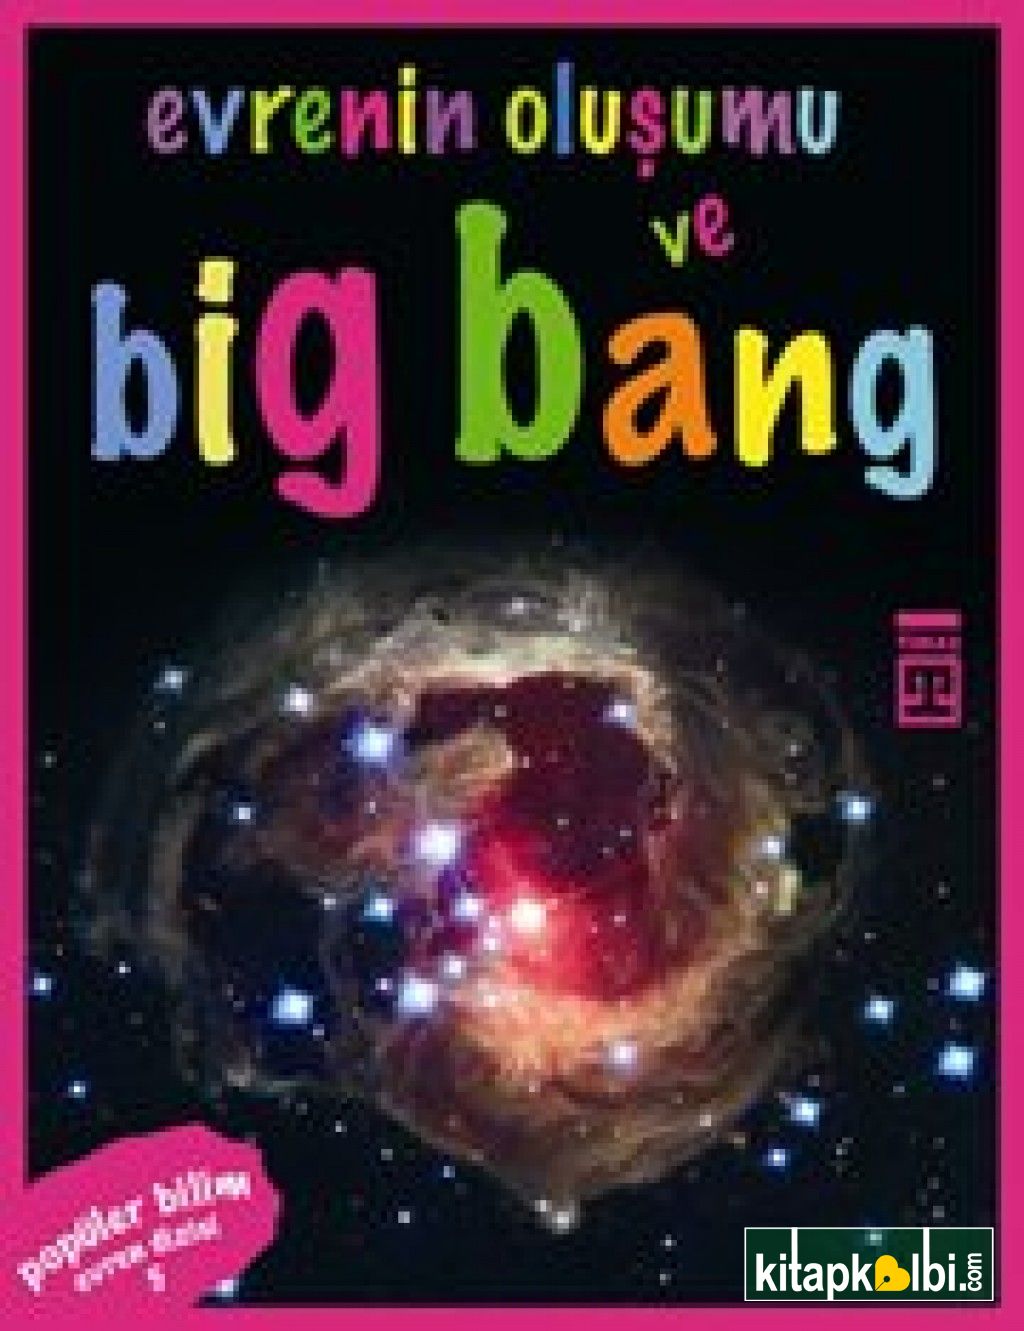 Evrenin Oluşumu ve Big Bang